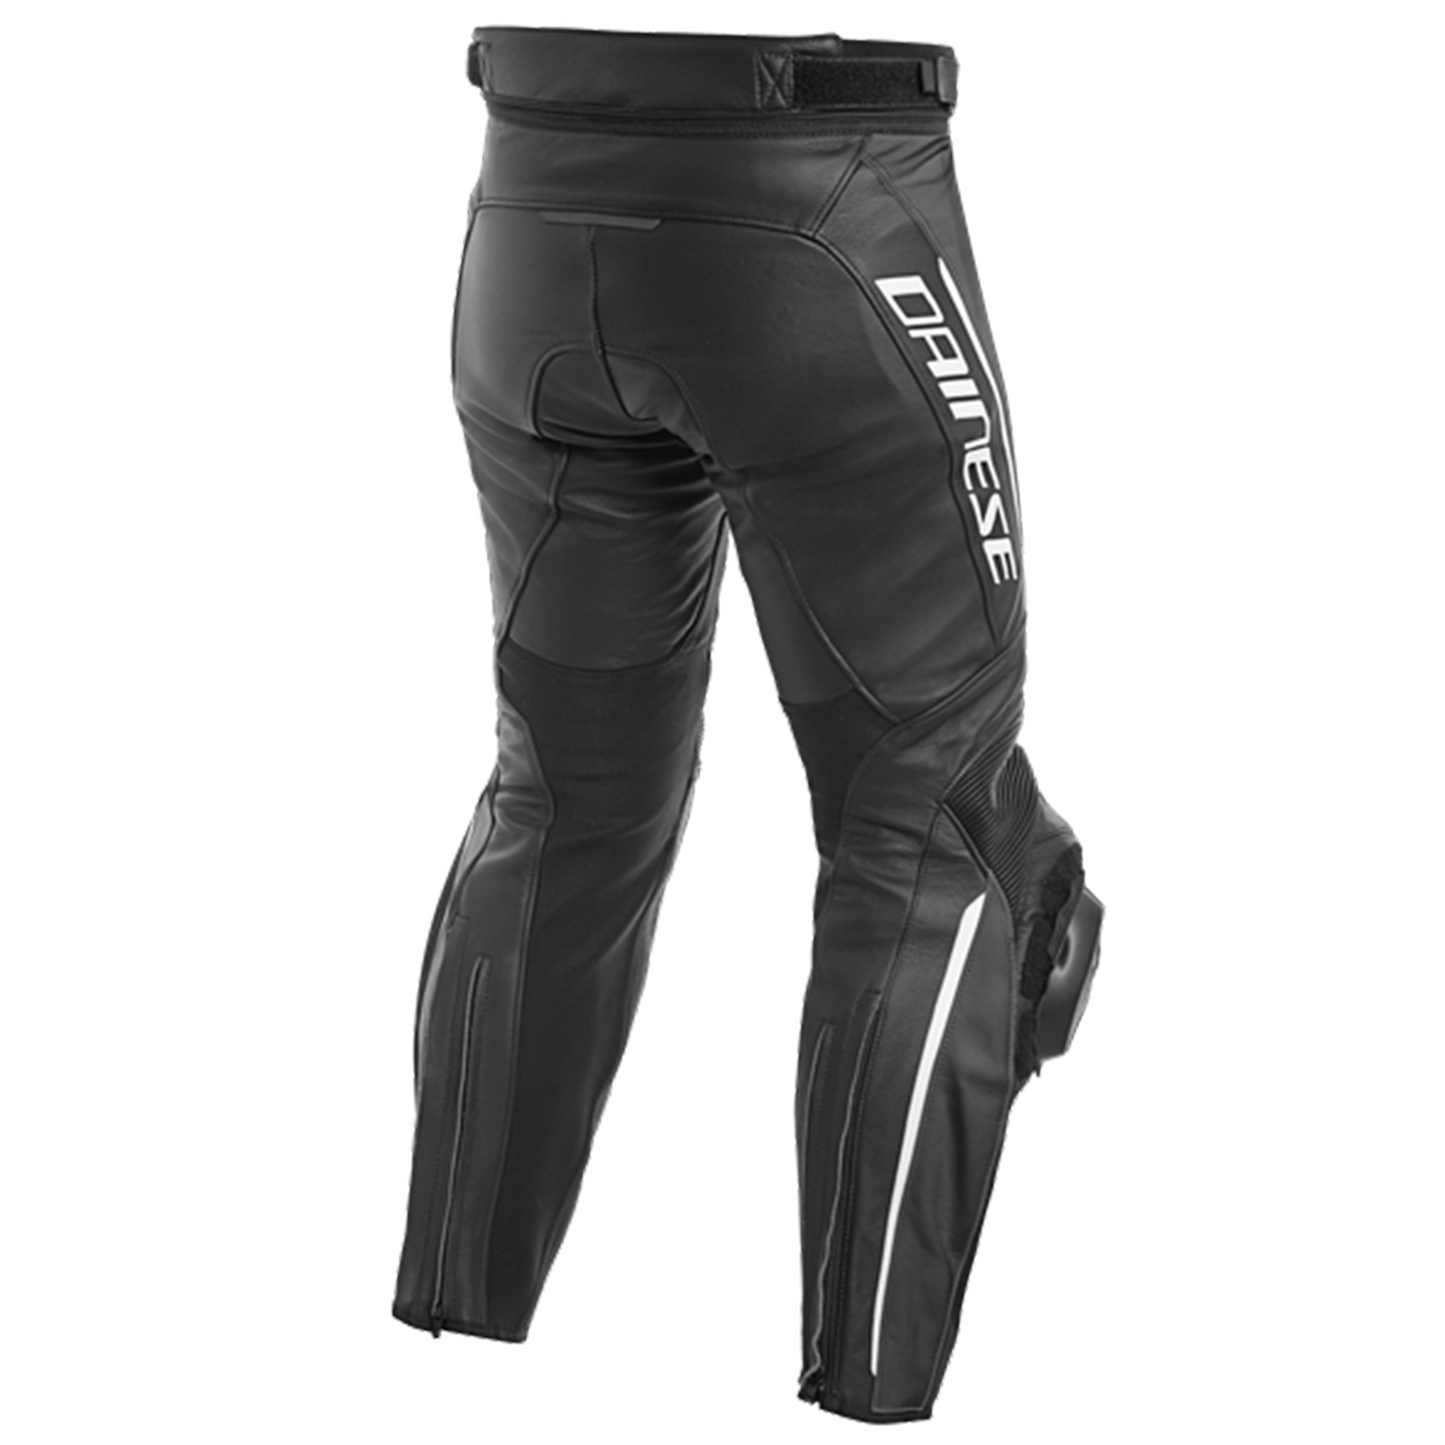 Dainese Delta 3 Leather Pants - Short Leg - Black/White